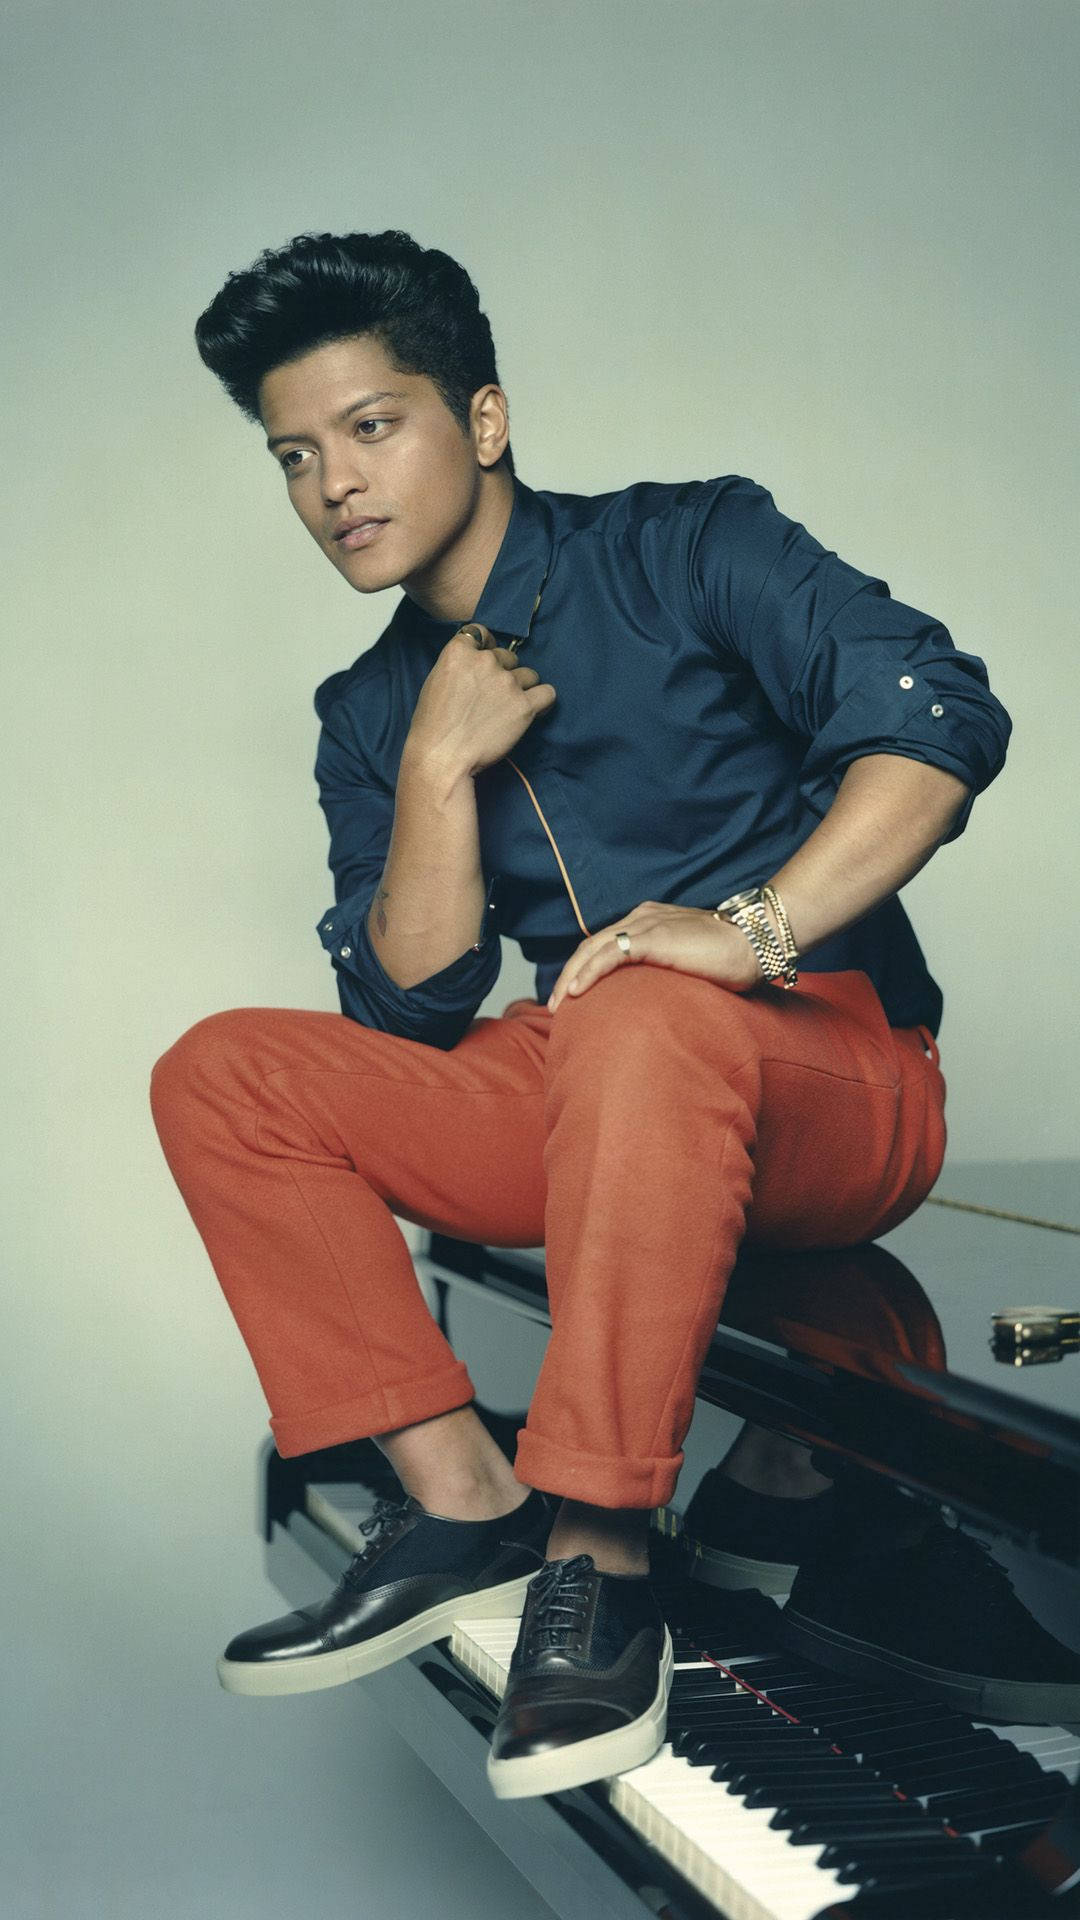 Singer Bruno Mars Showing Off His Piano Skills Wallpaper